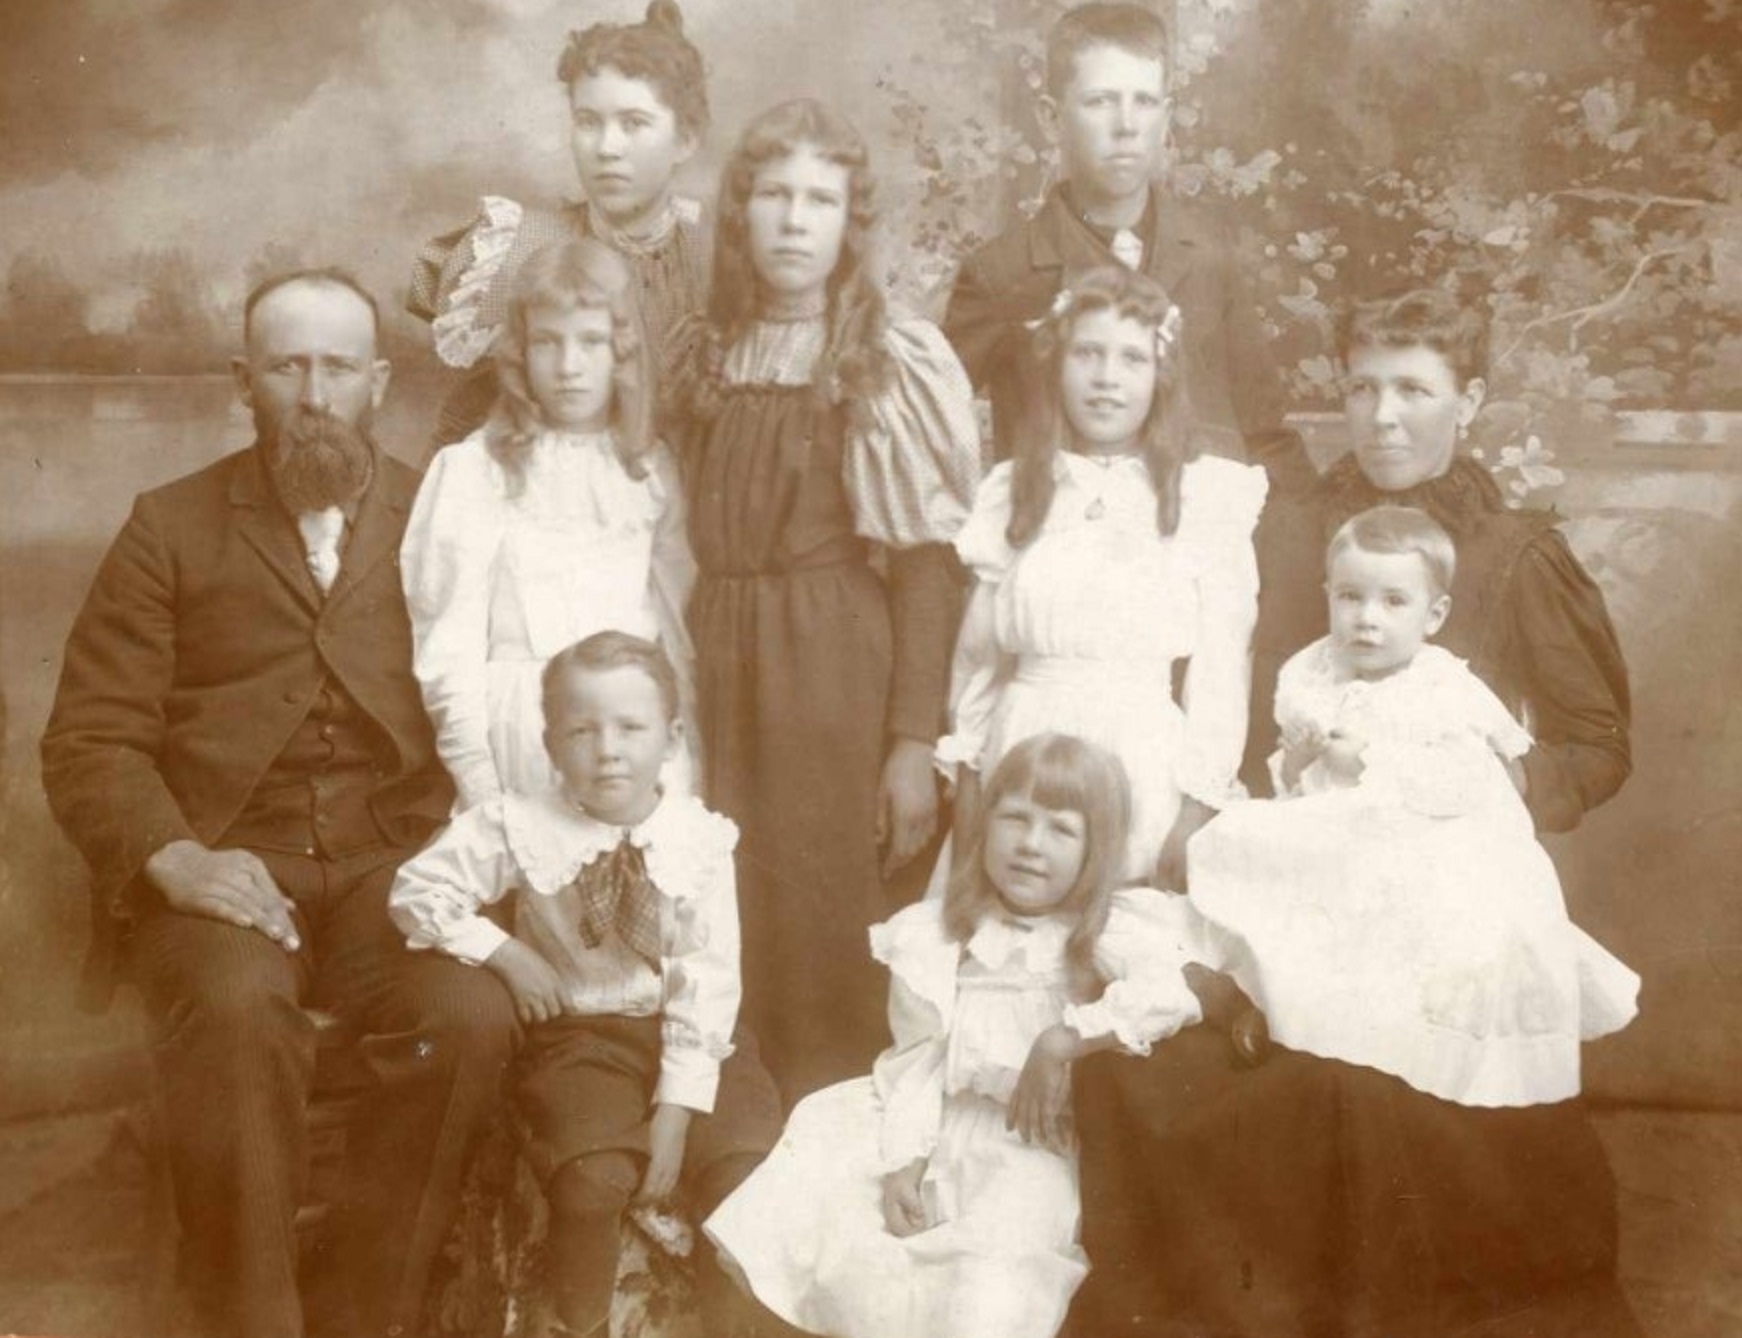 The Richard & Henrietta Morris family